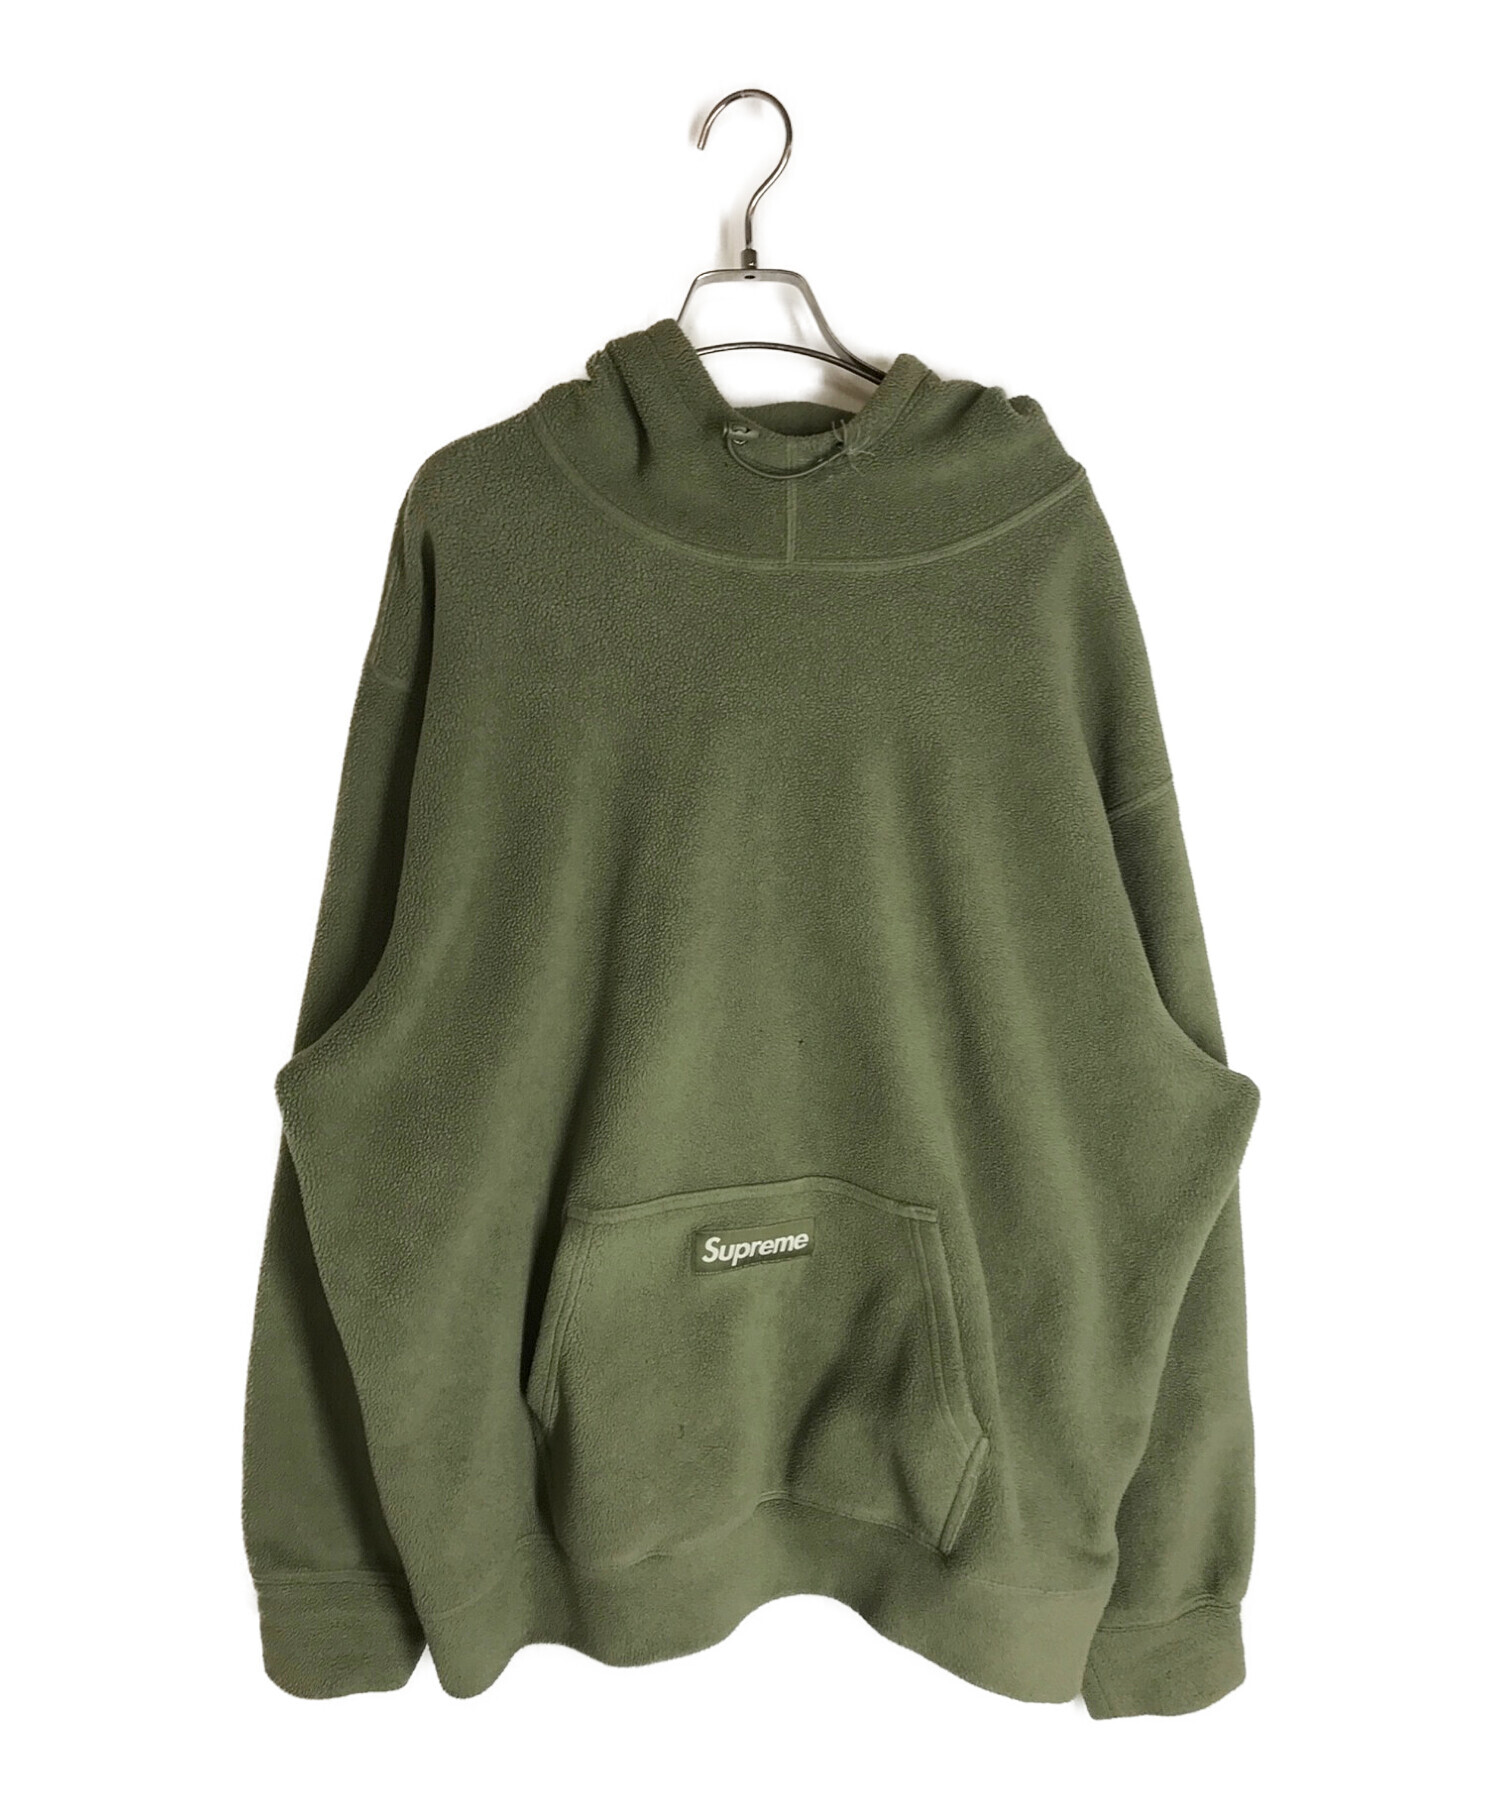 XL Supreme polartec Hooded Sweatshirt - パーカー